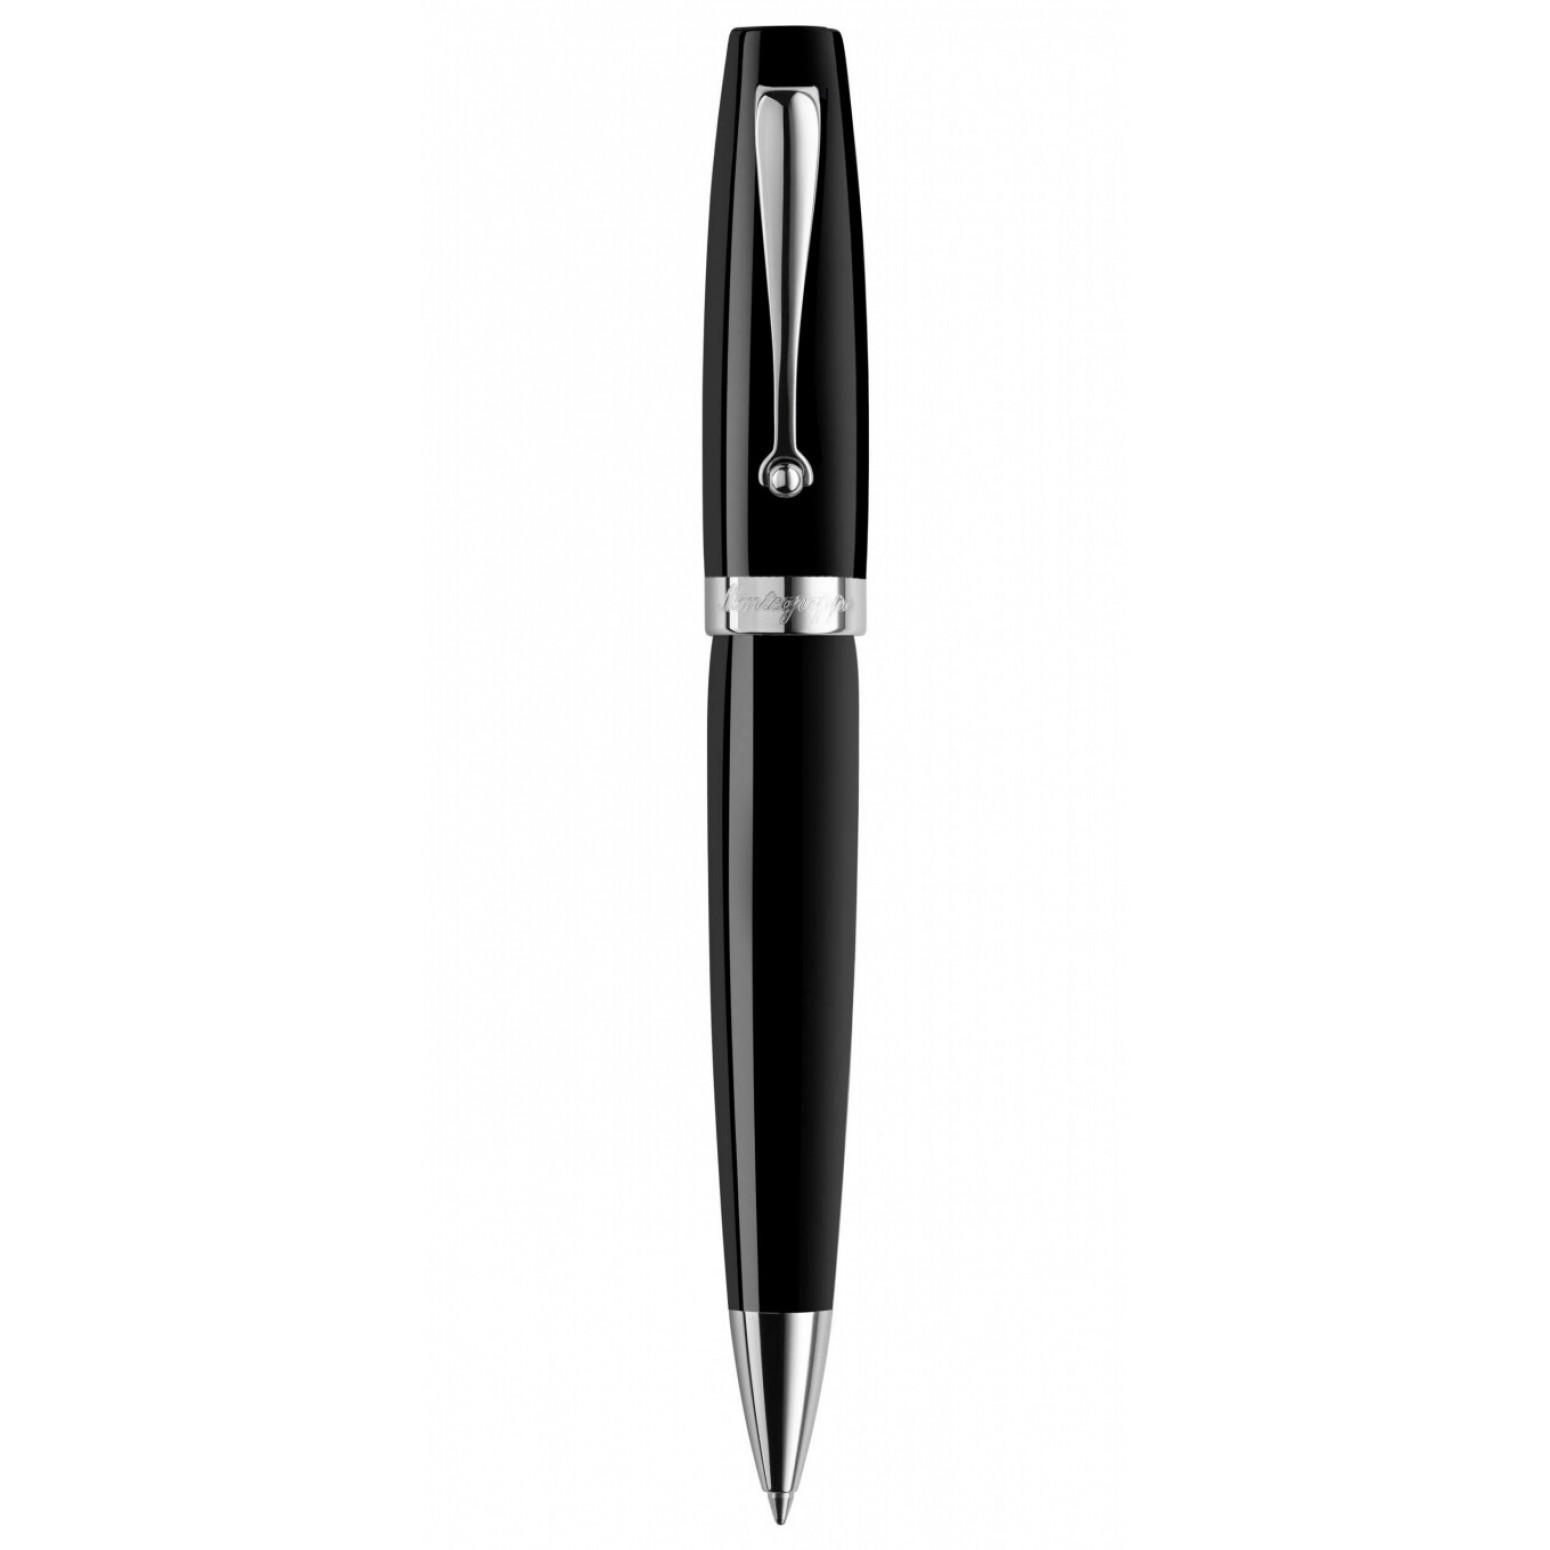 Montegrappa Ballpoint pen Mia Black Resin chrome trim, ISMIABIC , ac1581 GIFTS Κοσμηματα - chrilia.gr